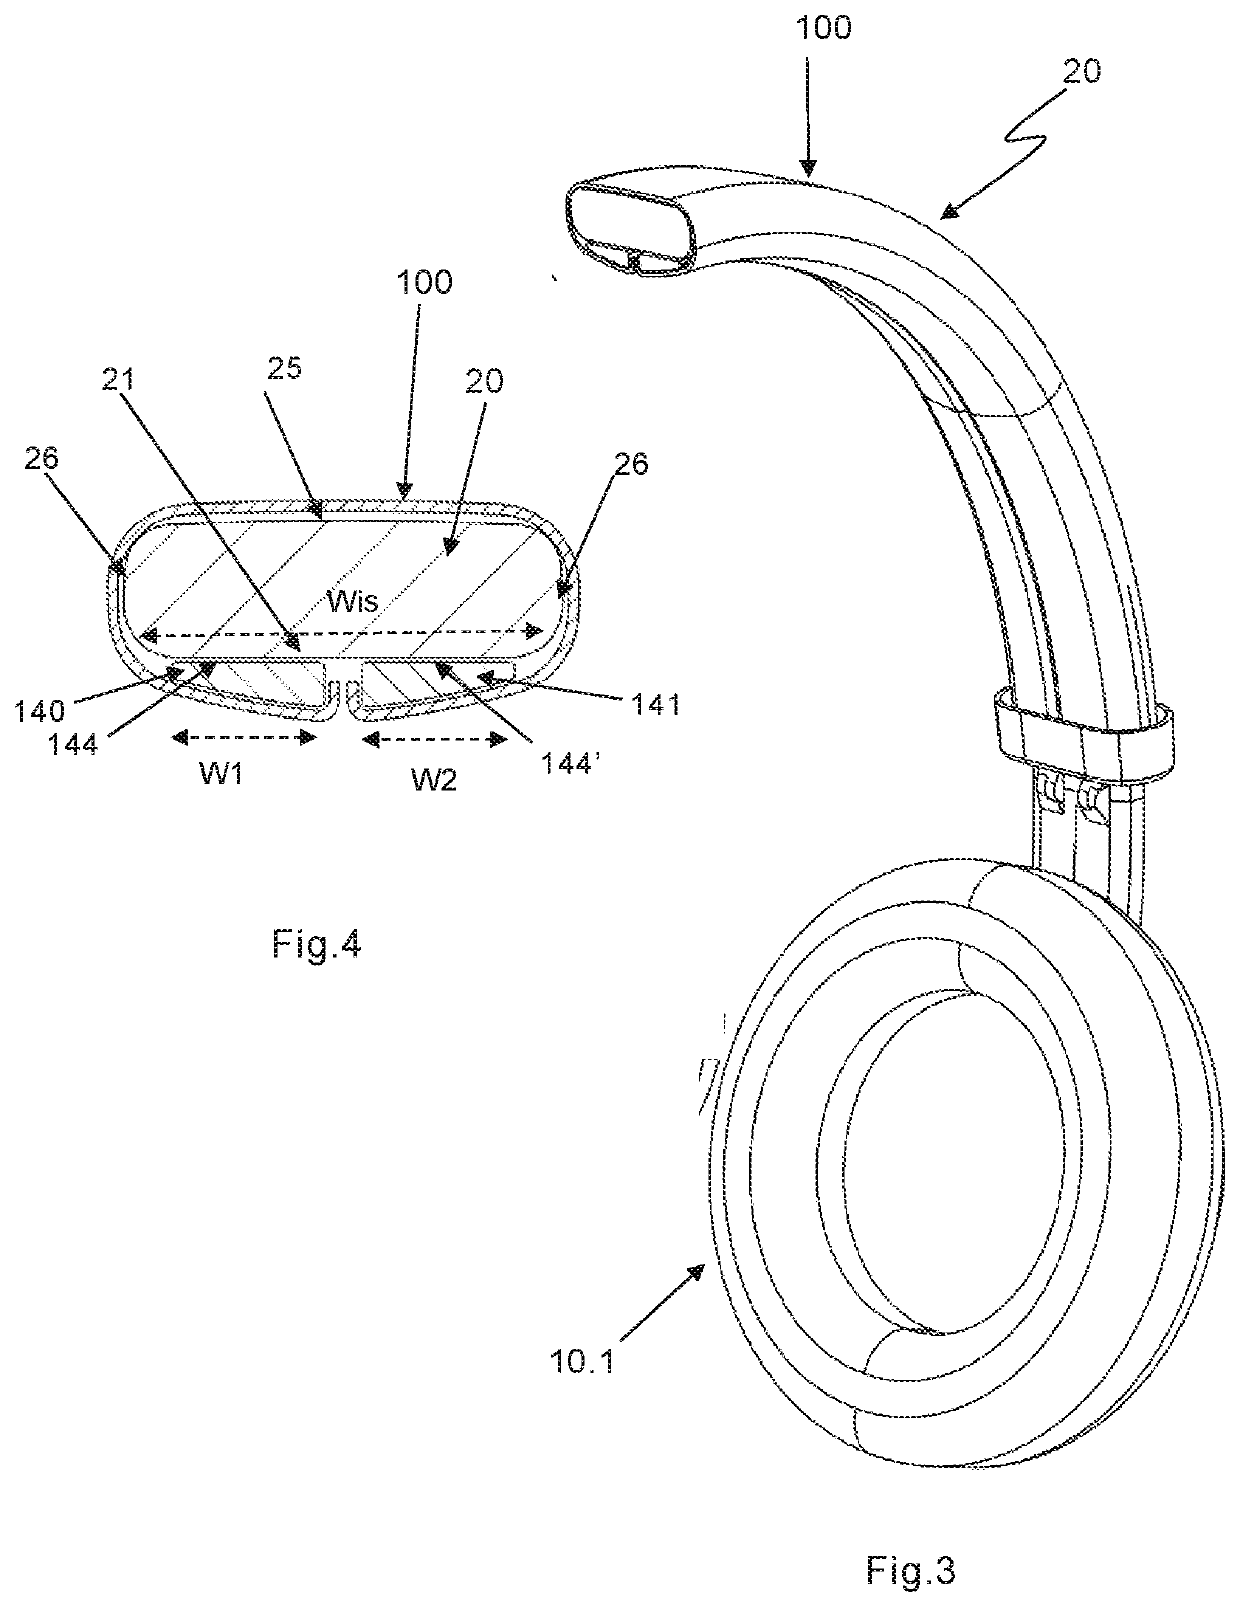 A headband cover for detachable attachment to a headband of a headphone